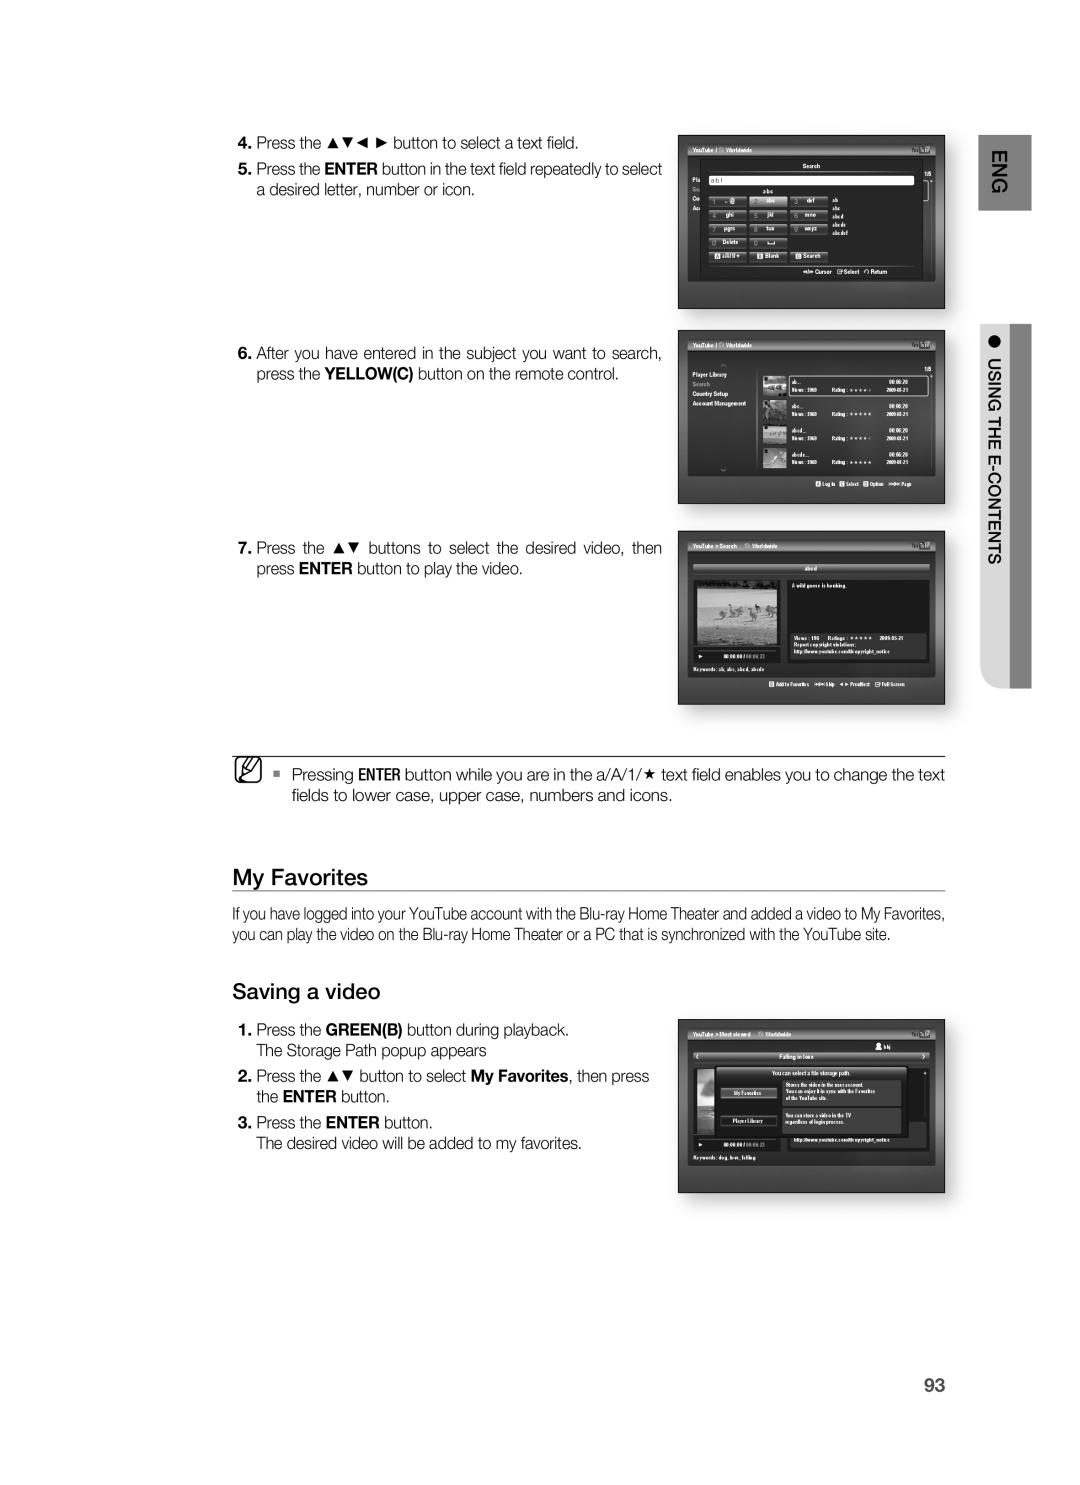 Samsung HT-BD3252 user manual My Favorites, Saving a video 